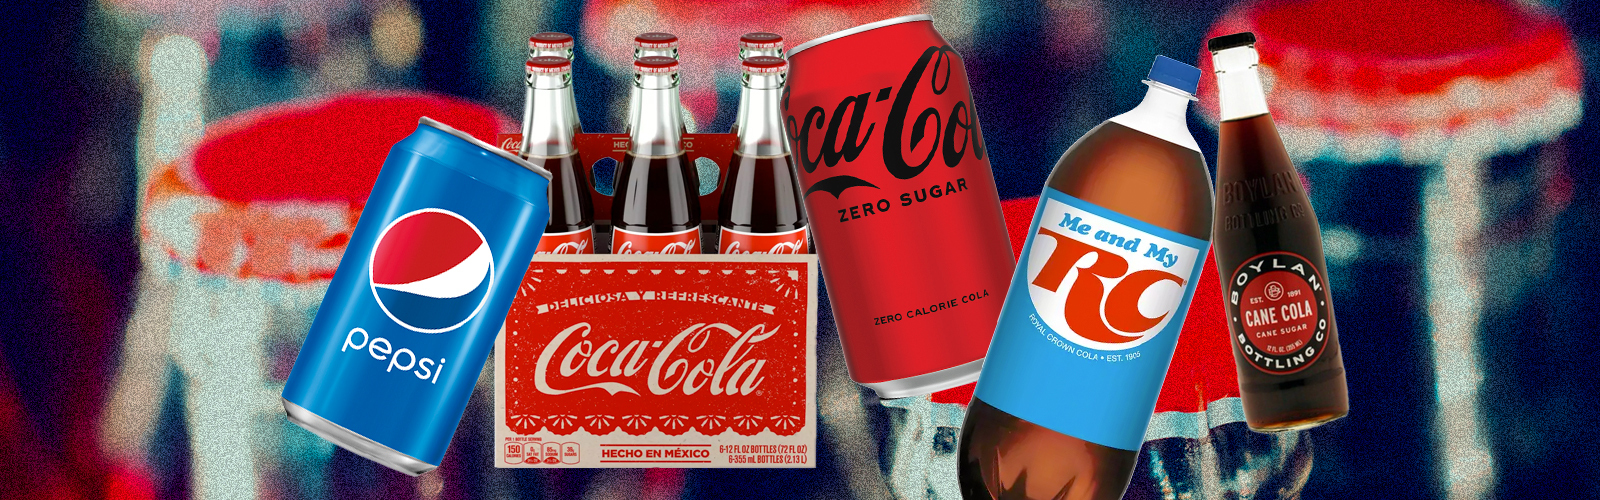  Coca-Cola Ultimate Bottle, 20 fl oz : Grocery & Gourmet Food